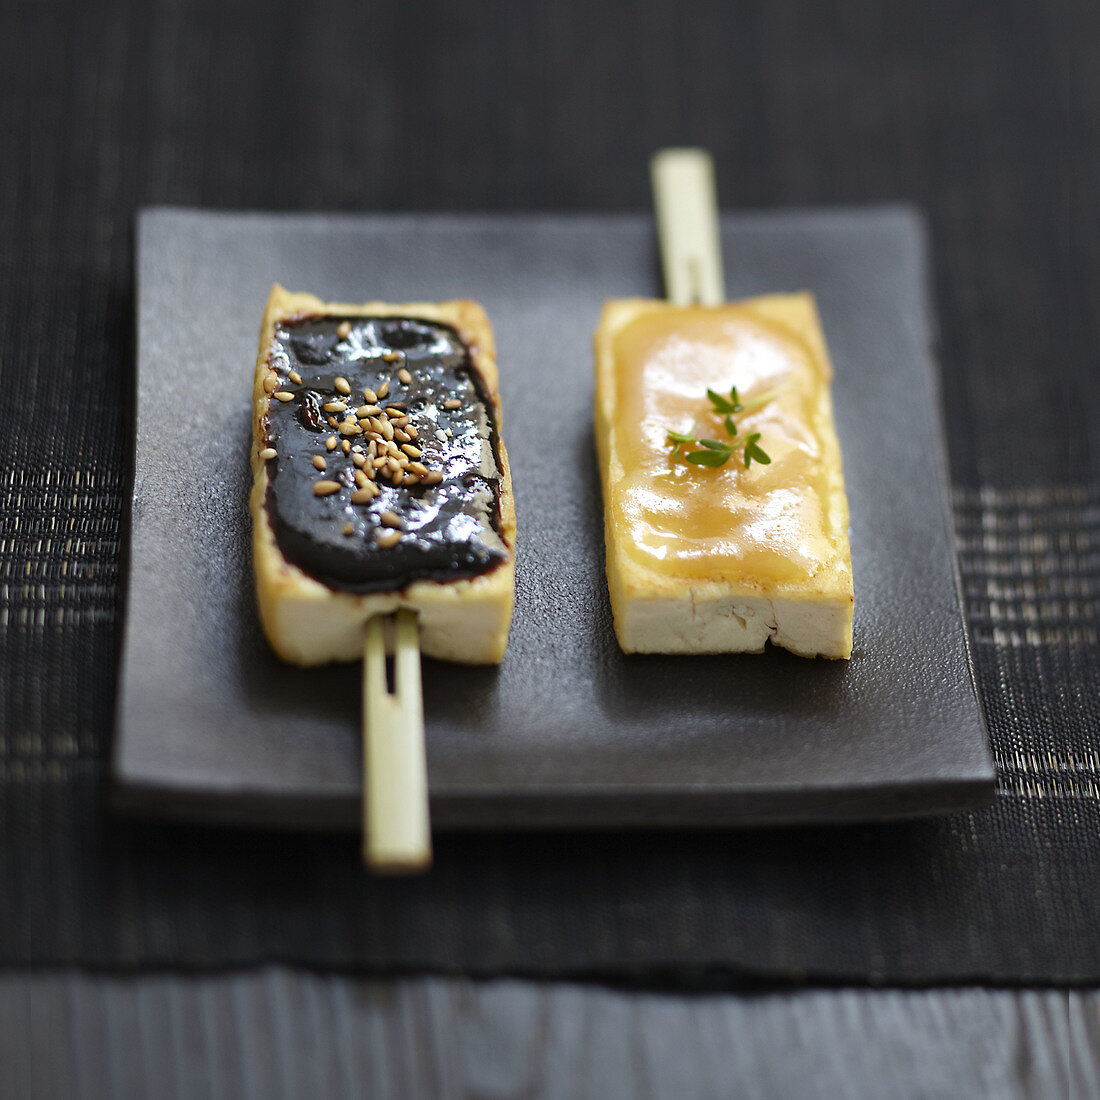 Tofu Yakitoris with white and black miso sauce